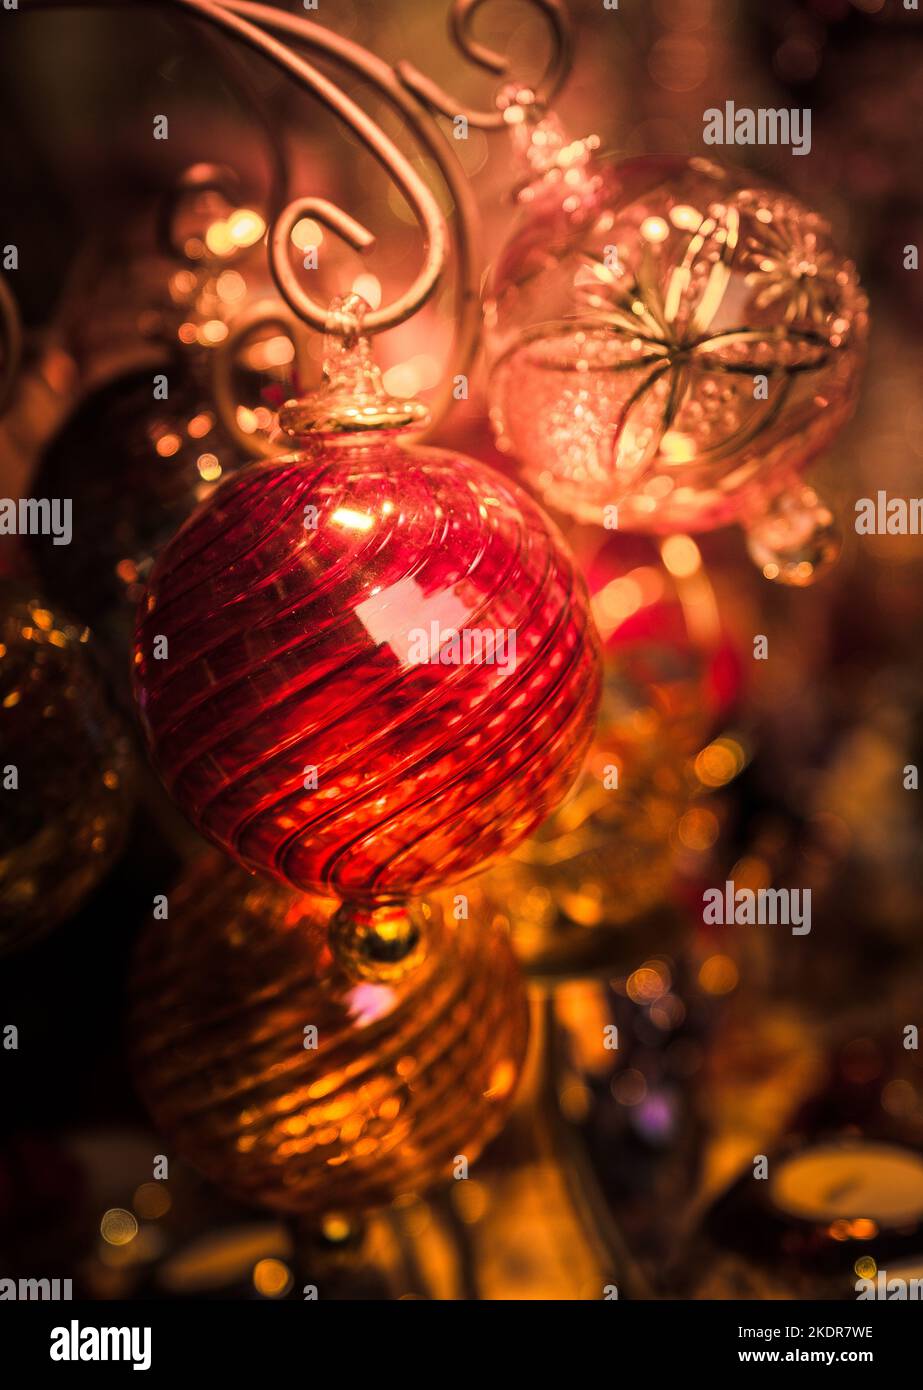 Beautiful artisan hand blown glass Christmas tree hanging baubles on sale at Bath Christmas Market. Stock Photo